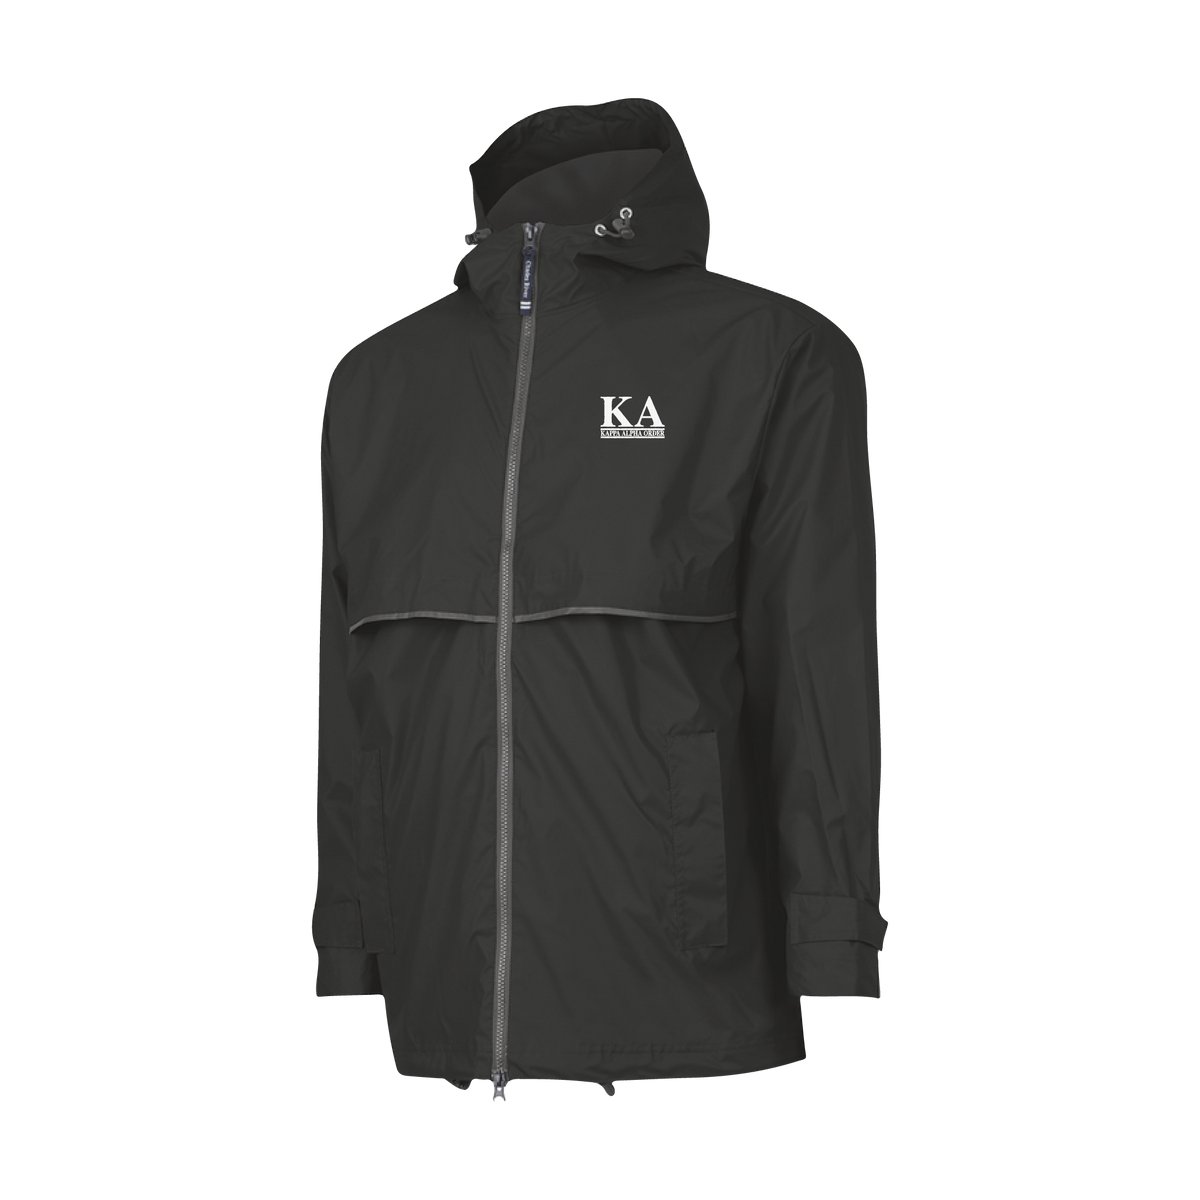 B-Unlimited Greek - Rain Jacket (KA) - Charles River - 9199 - New Englander Rain Jacket - Black